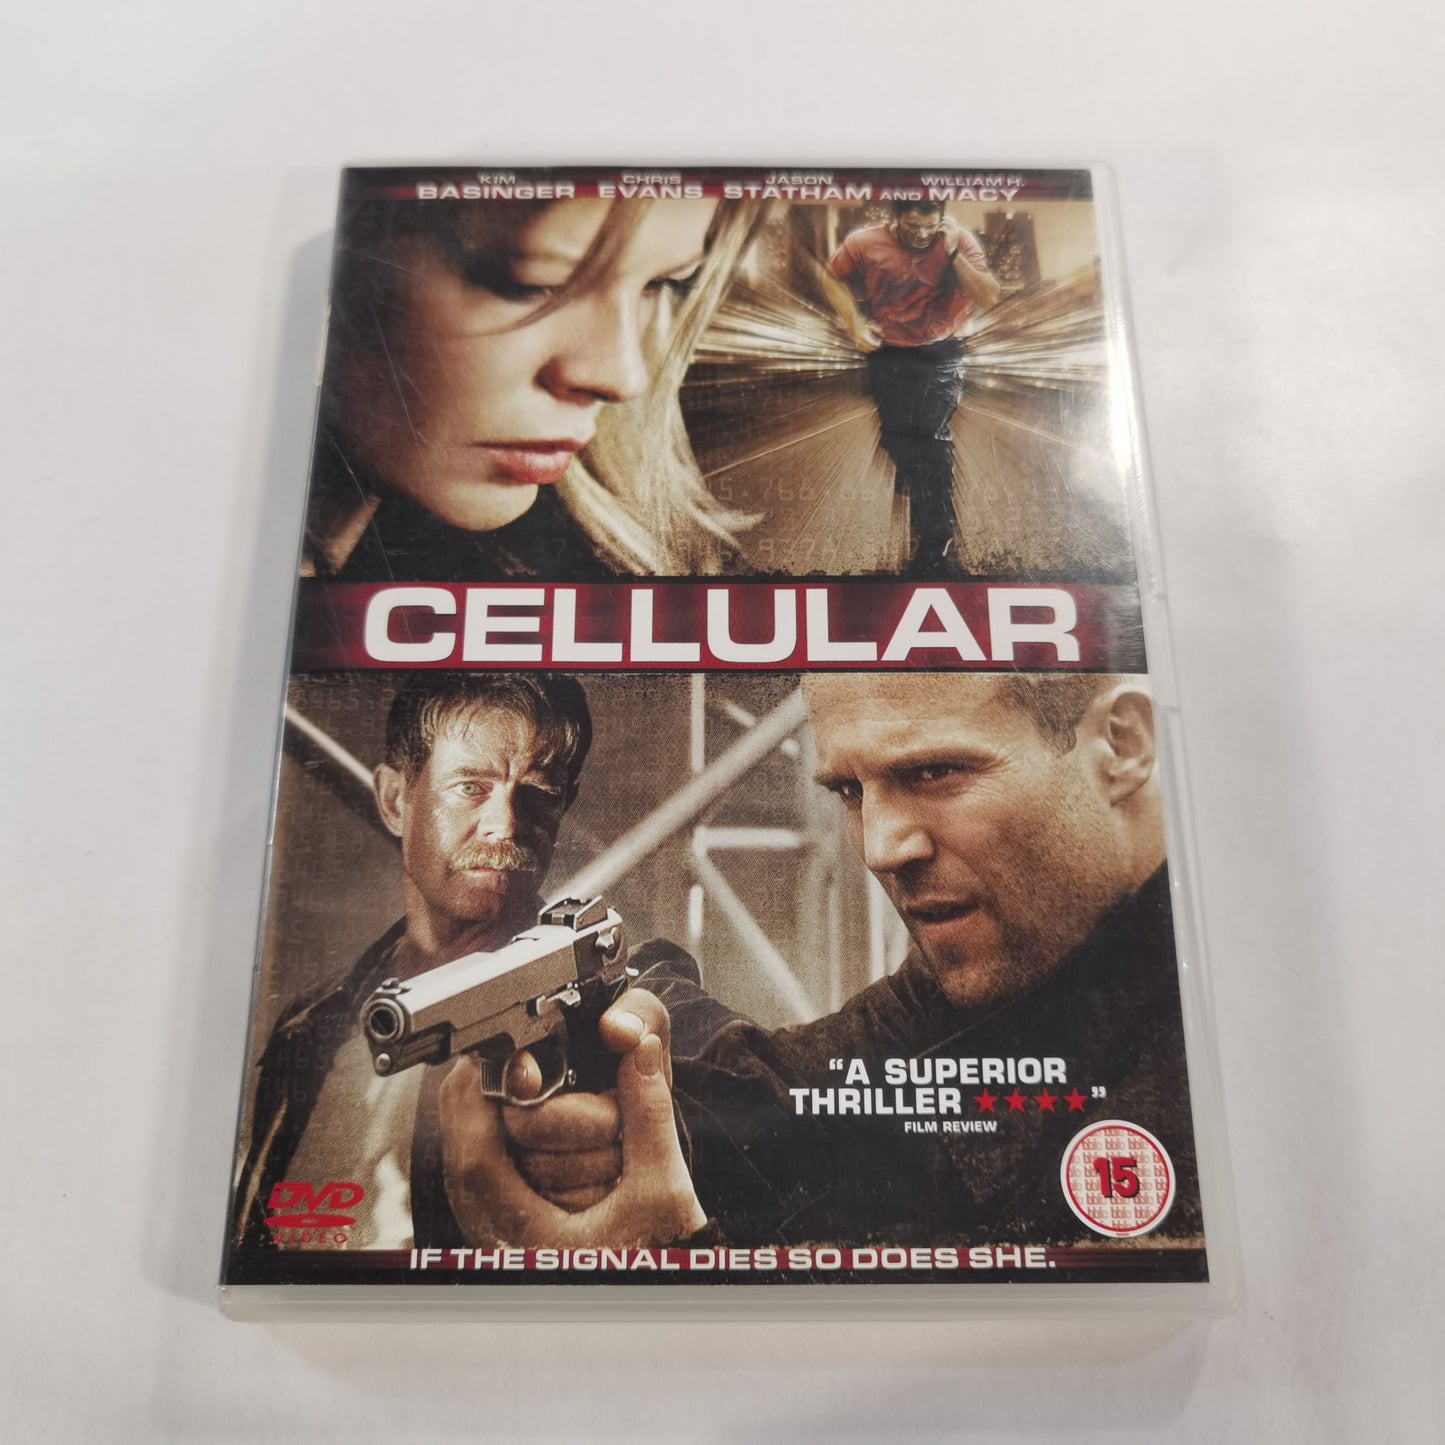 Cellular (2004) - DVD UK